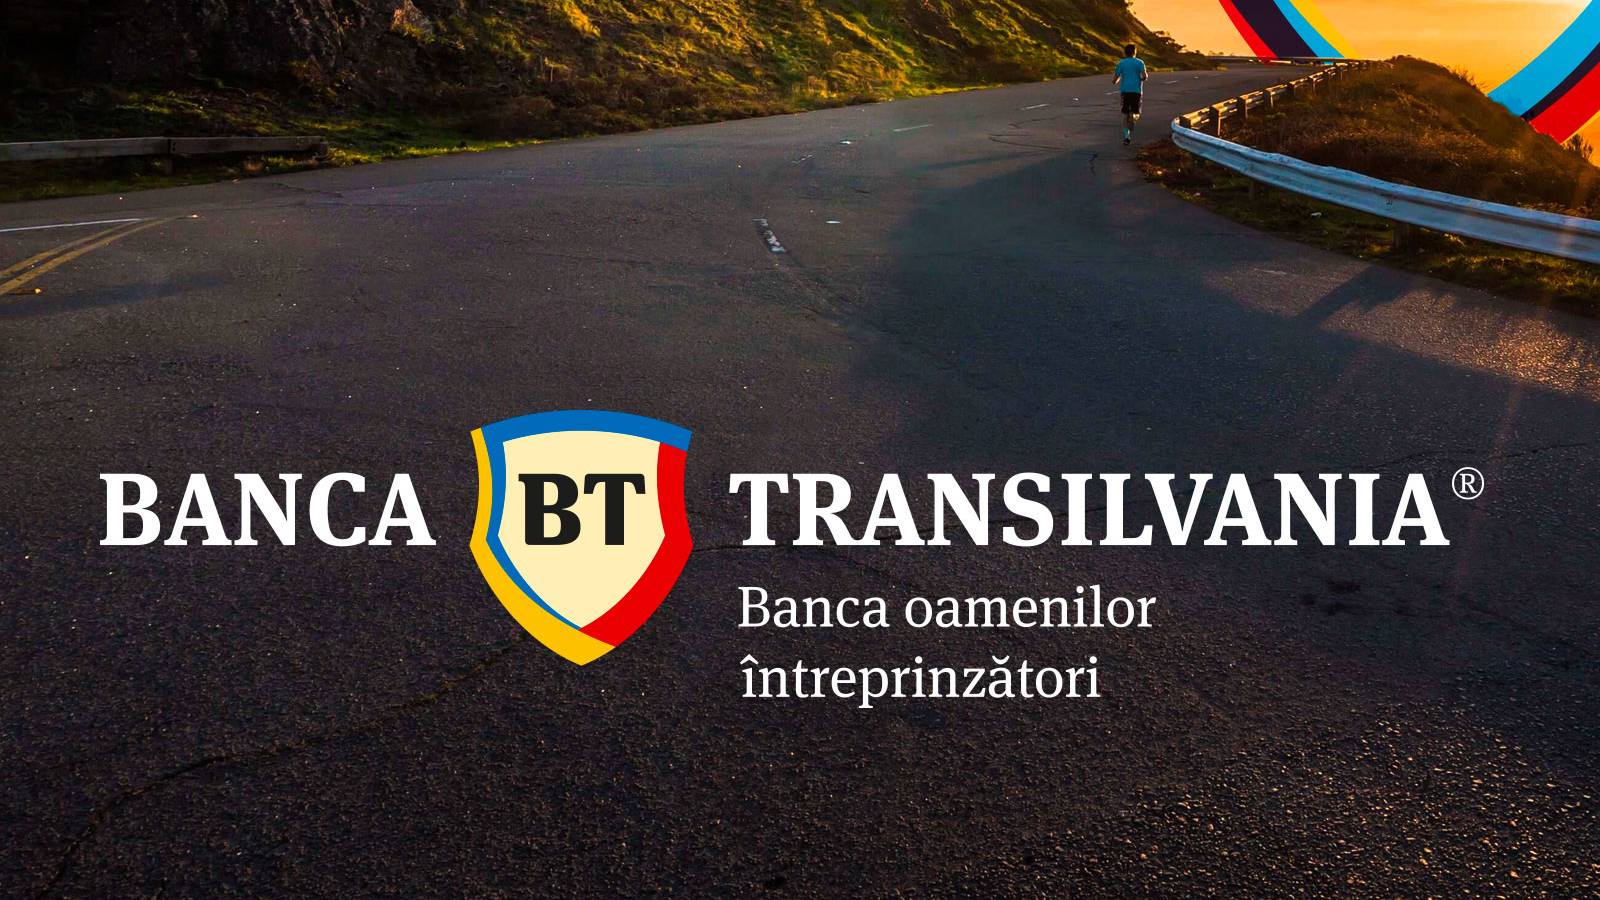 Eröffnung der BANCA Transilvania